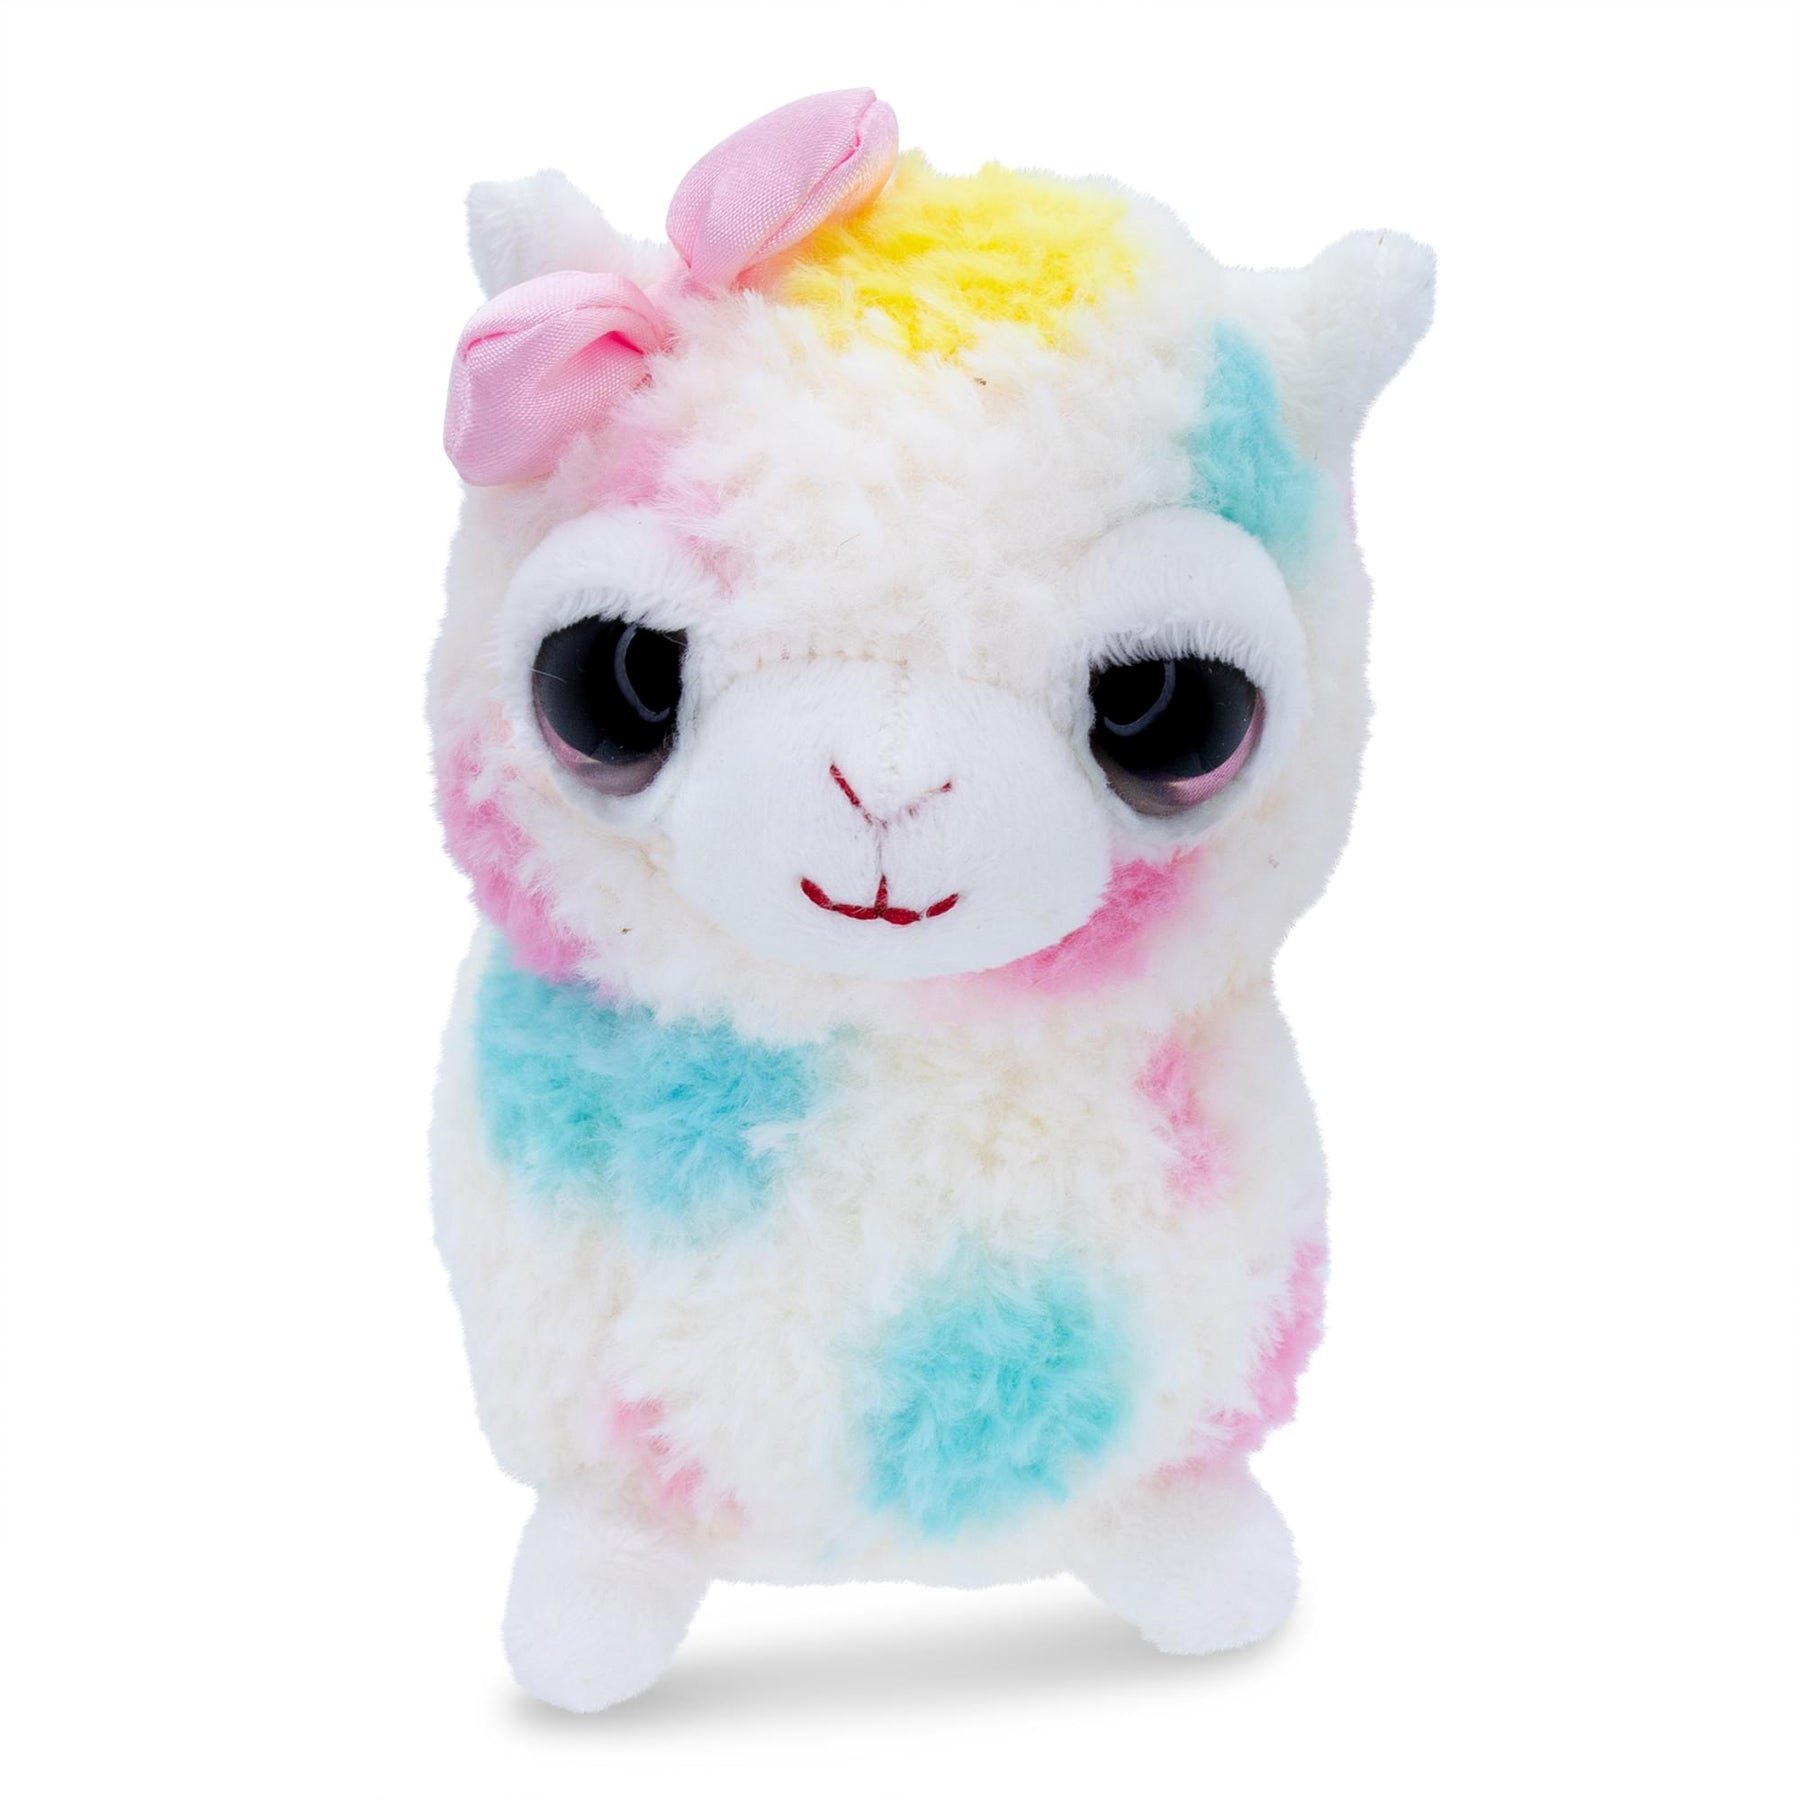 Cute and Cuddly 12 Inch Alpaca Plush | White